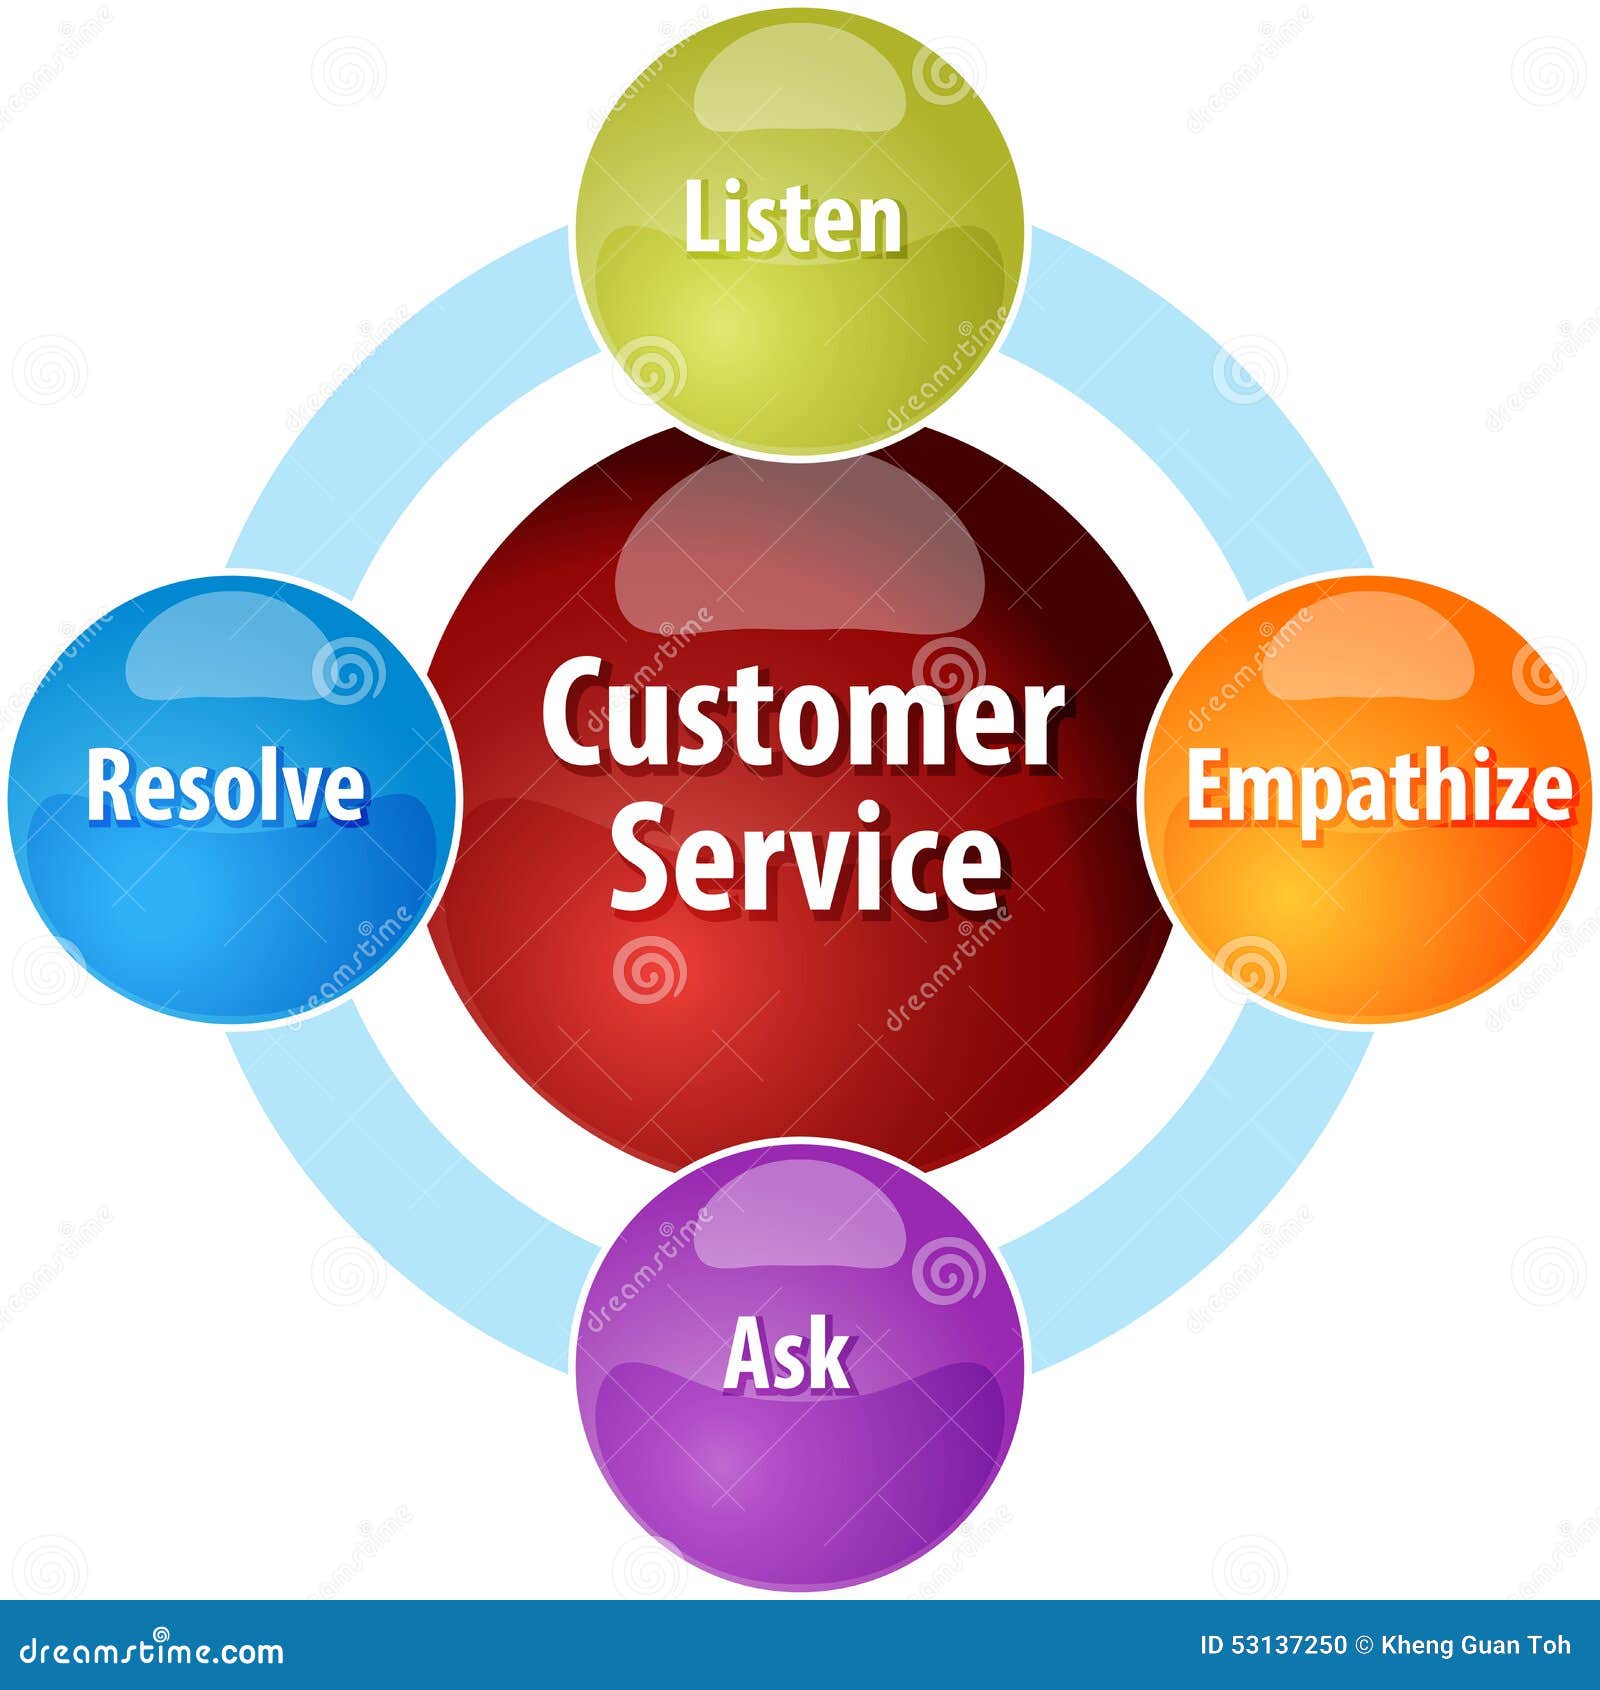 Customer Service Business Diagram Illustration Stock